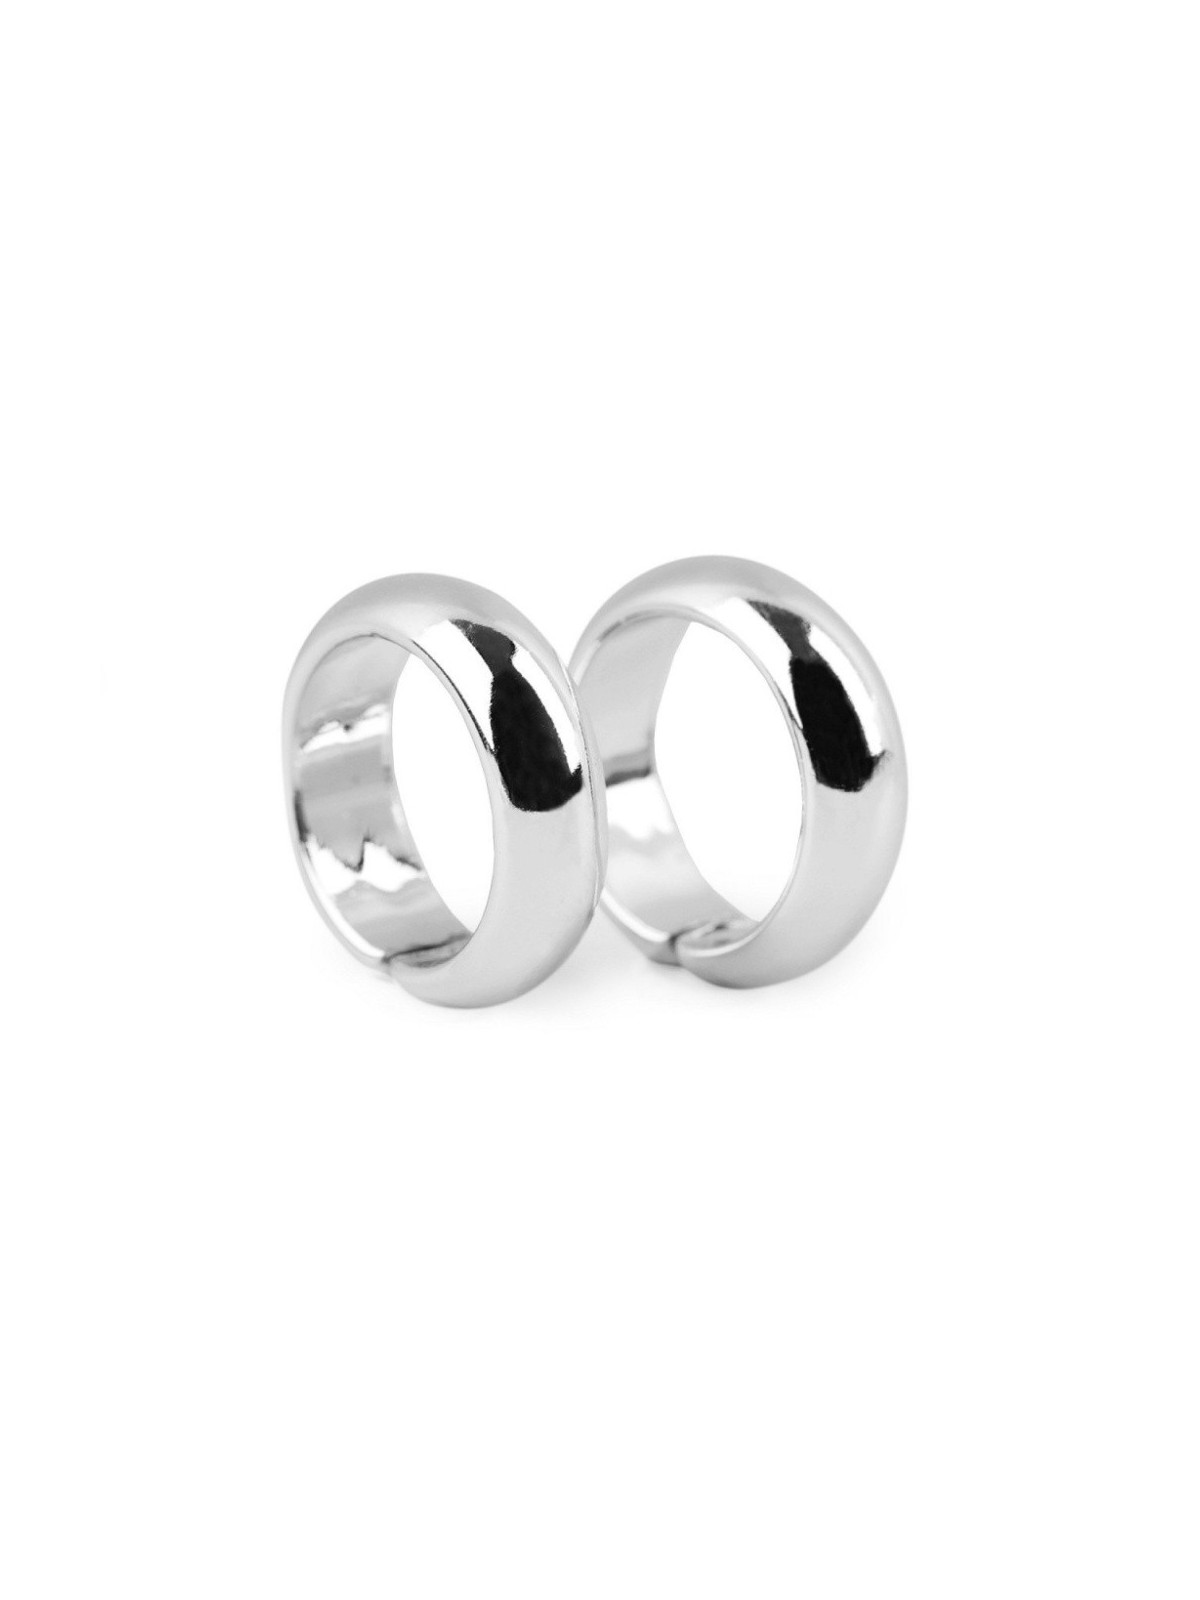 Decorative wedding rings silver - 2pcs - same size